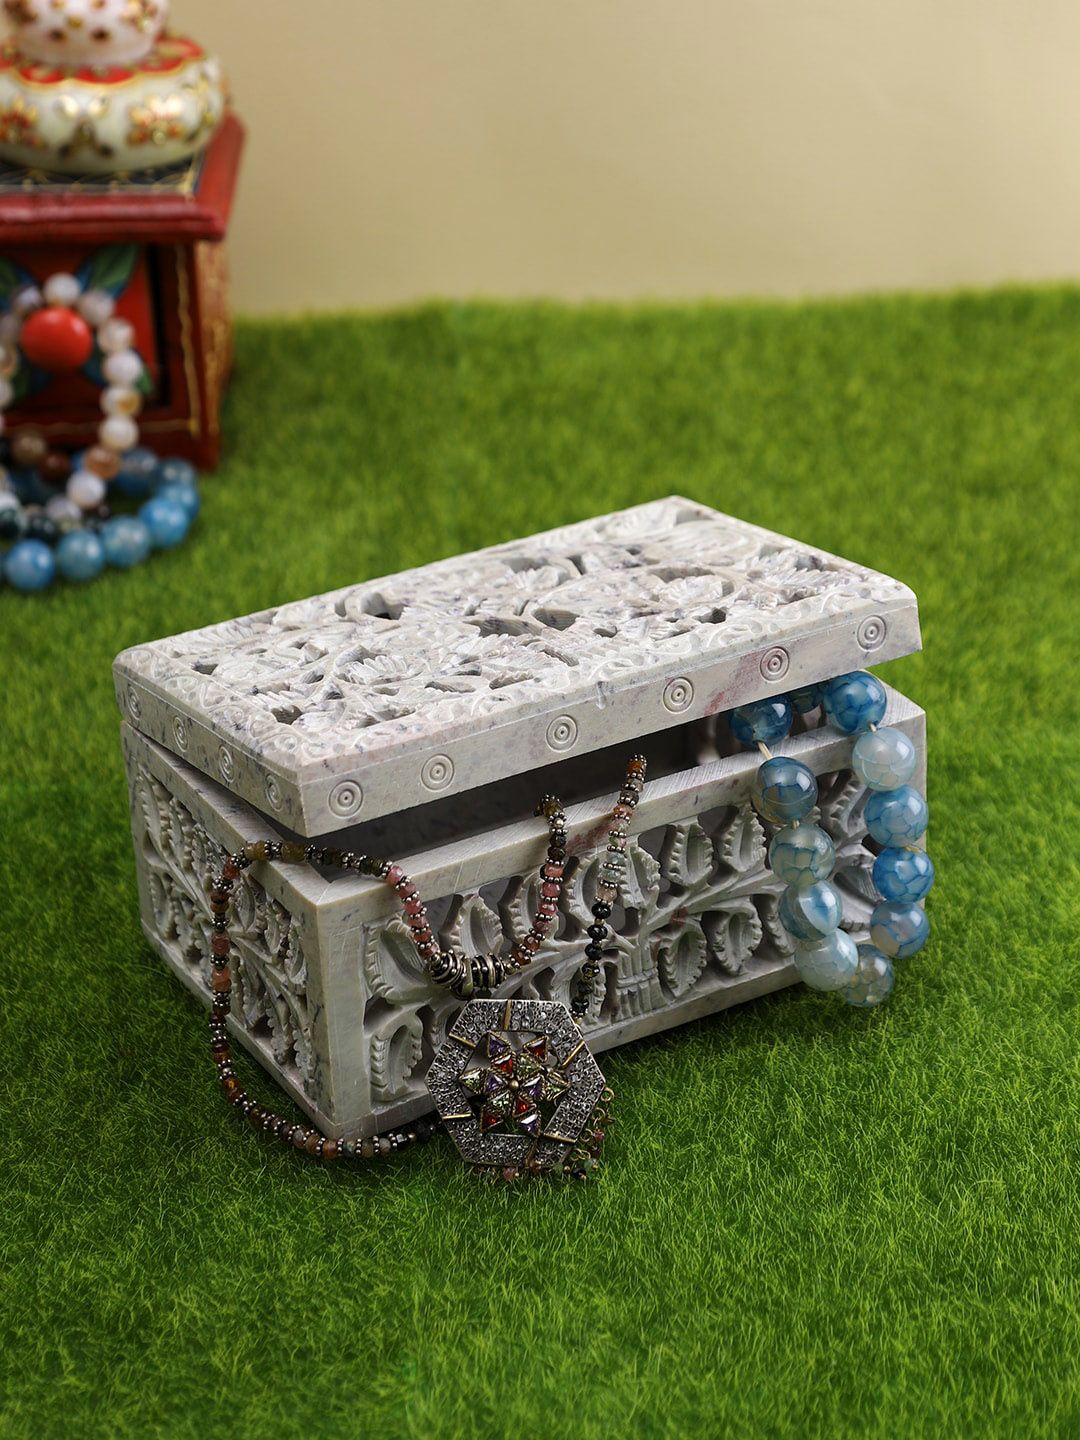 Aapno Rajasthan White Soapstone Jewellery Box Price in India